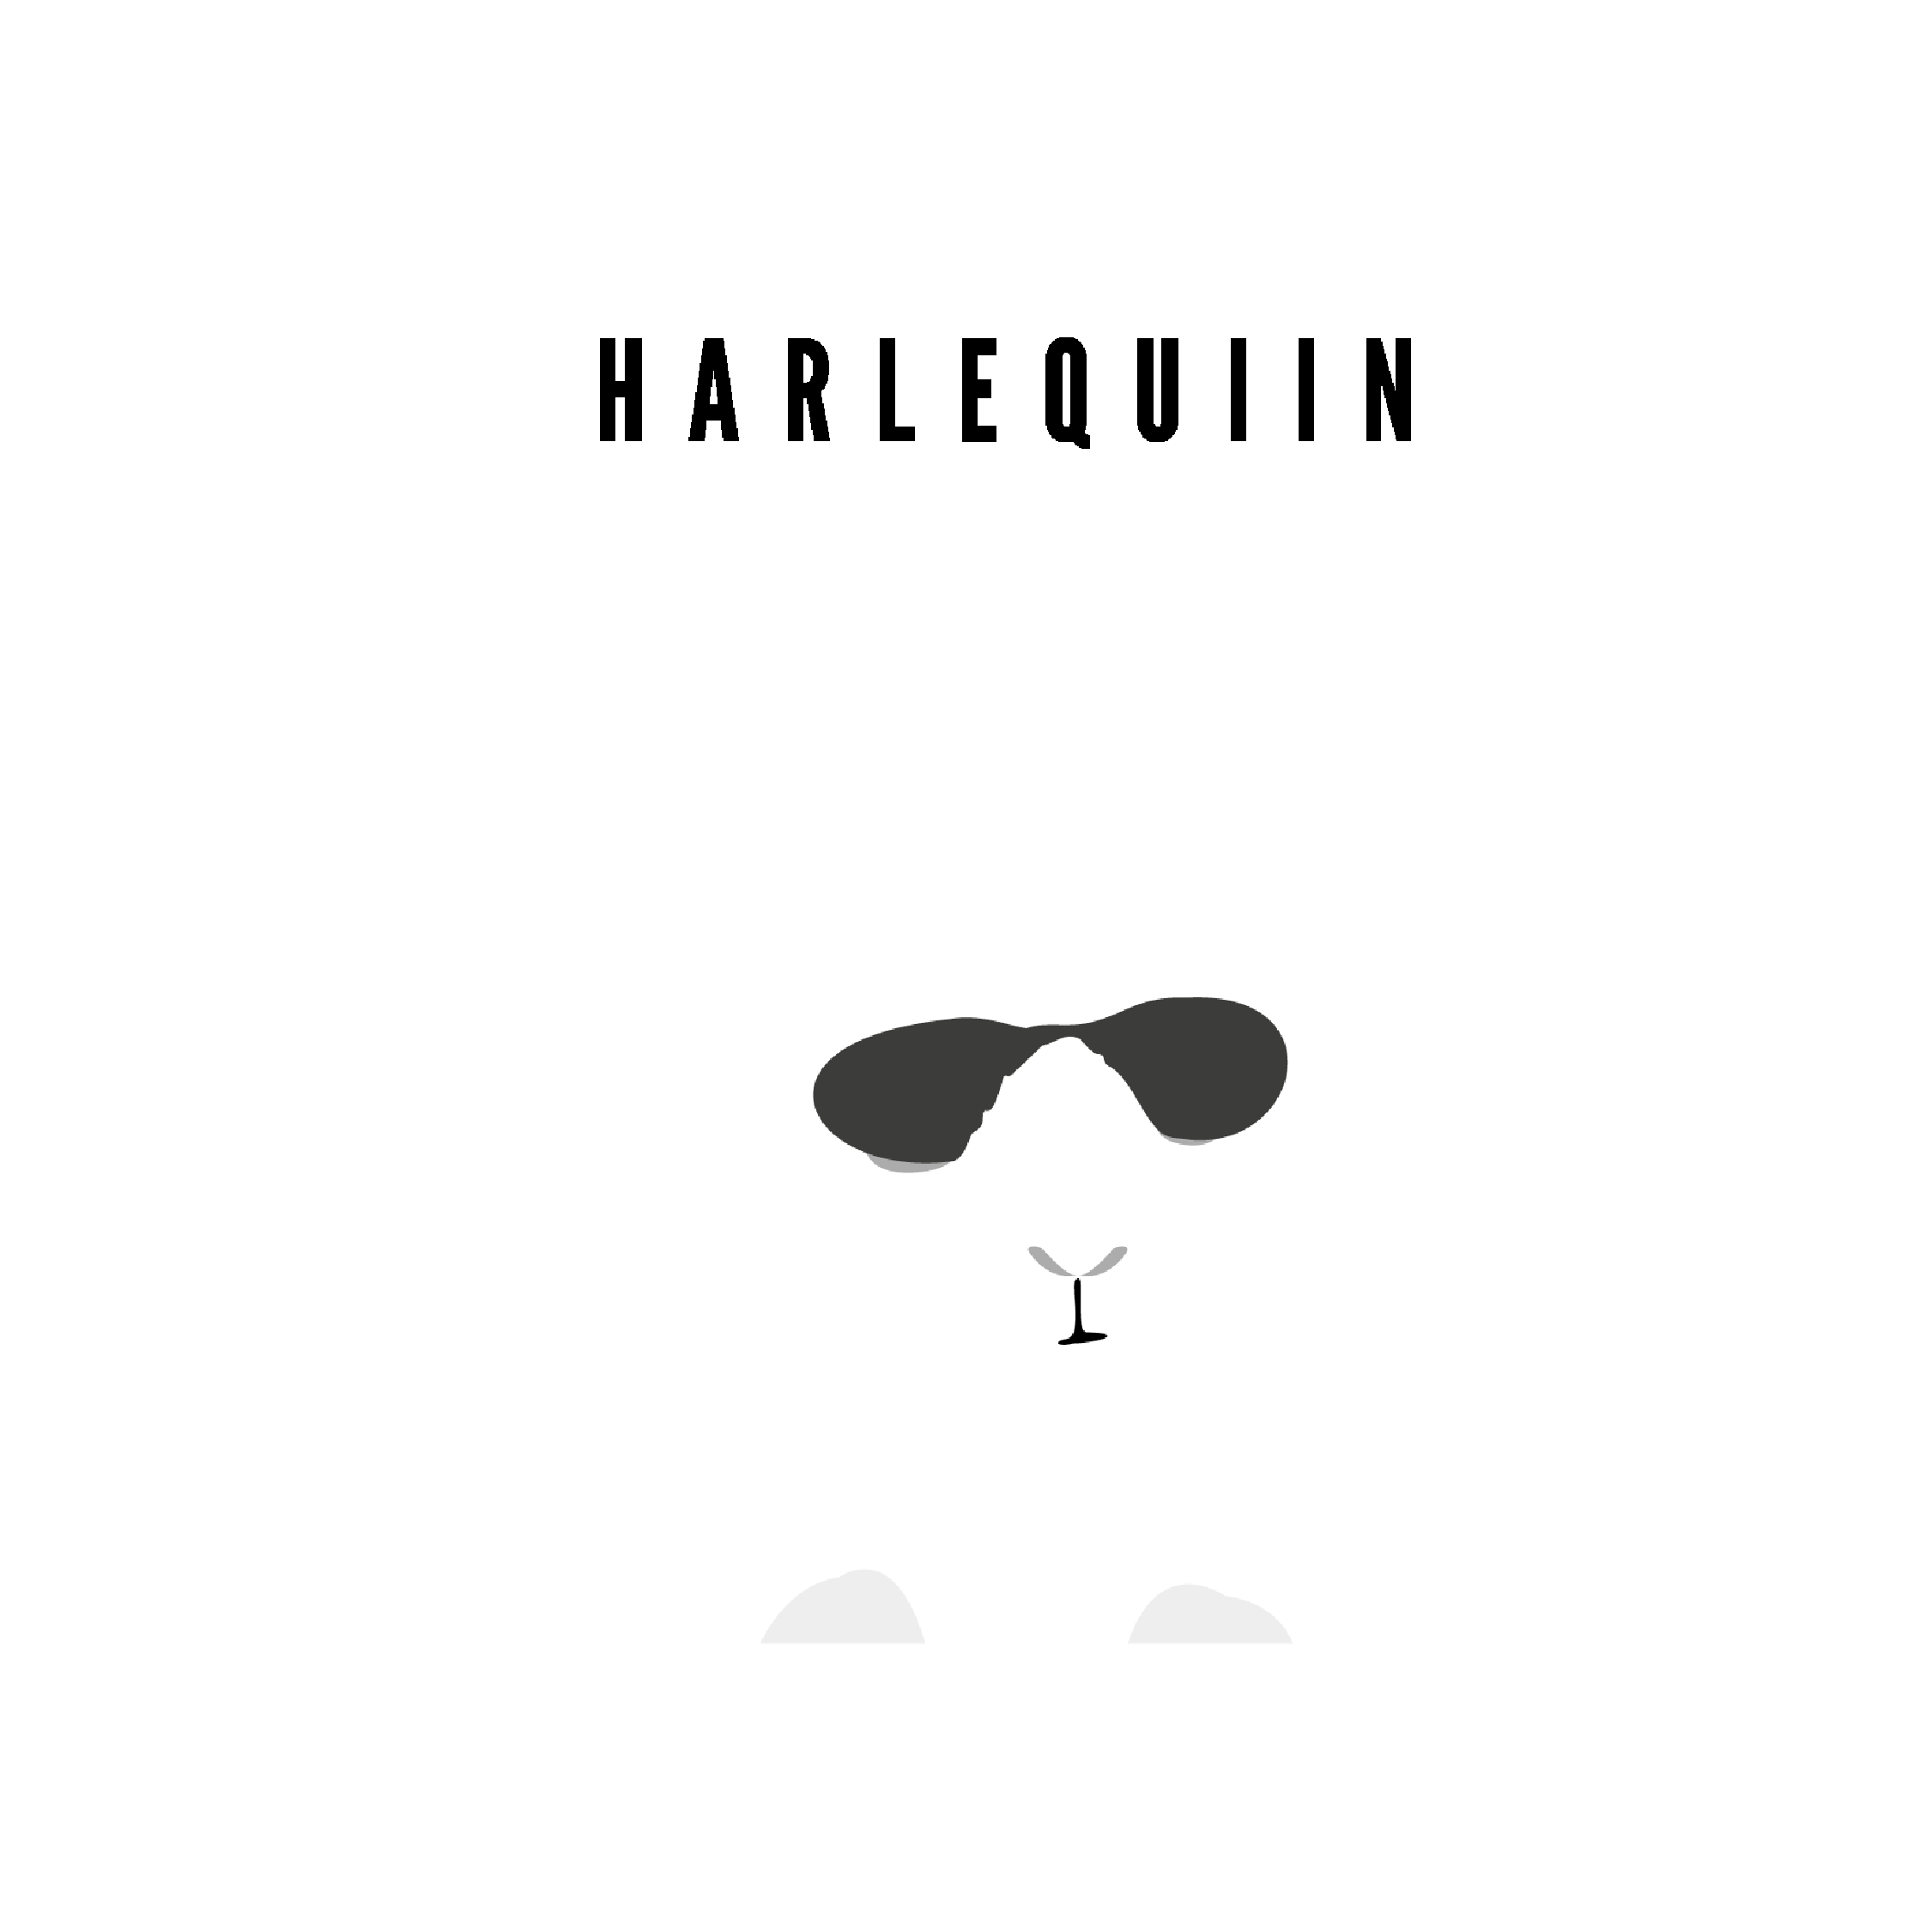 Harlequiin Eco Tote Bag - Limited Run